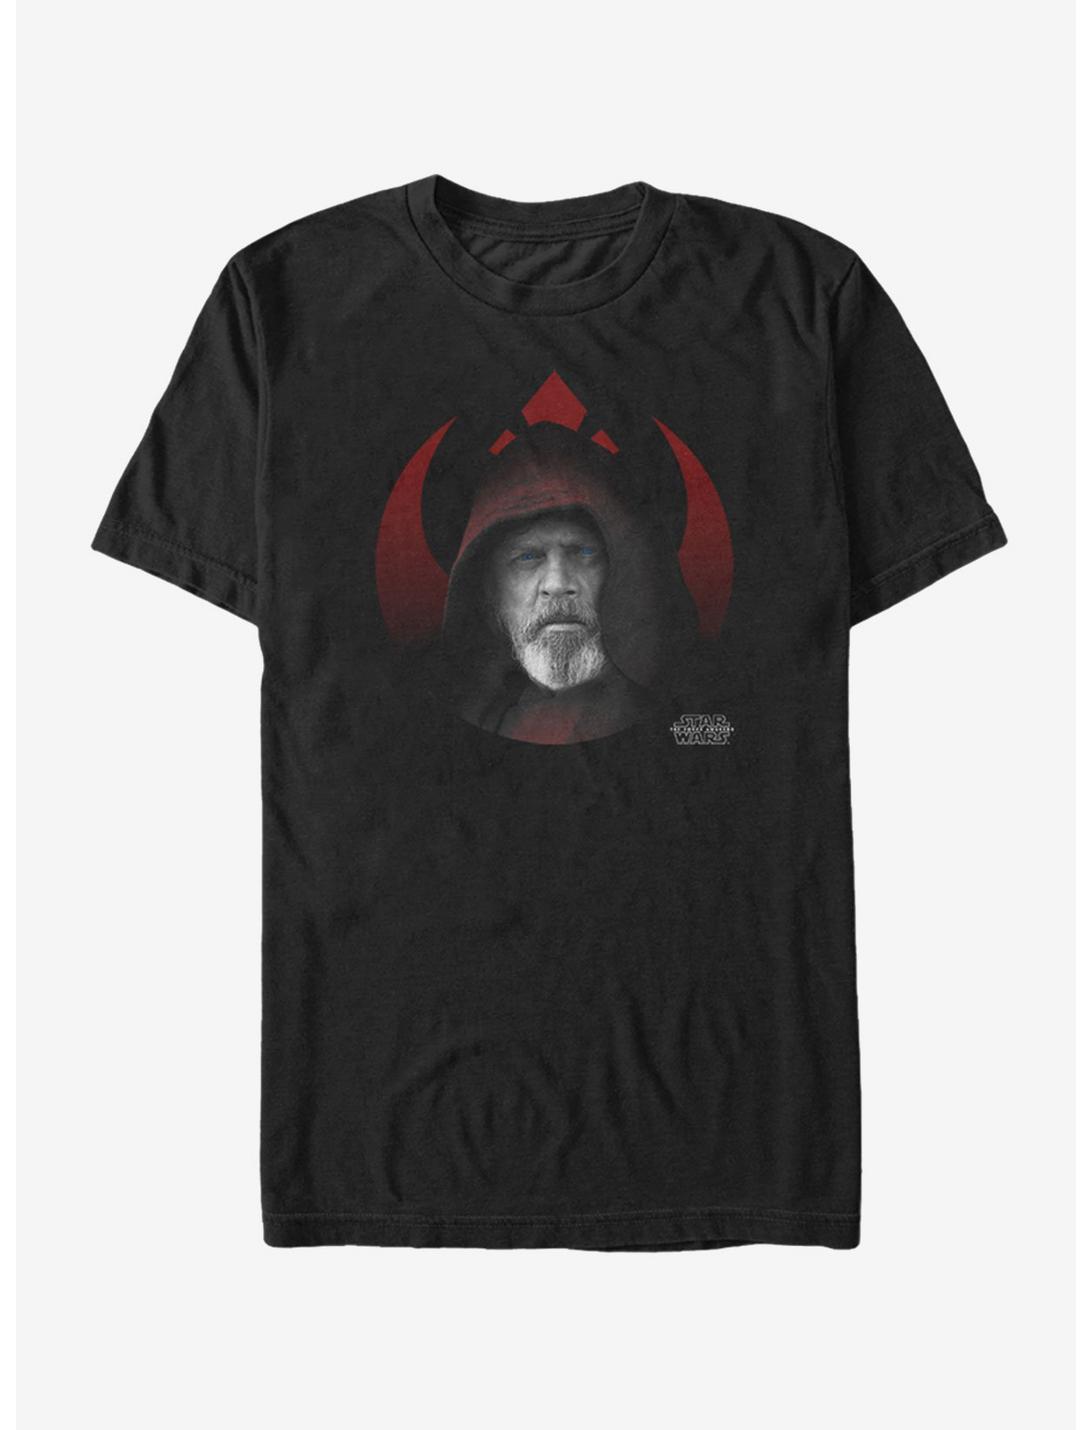 Star Wars Hooded Luke Rebel Symbol T-Shirt, BLACK, hi-res